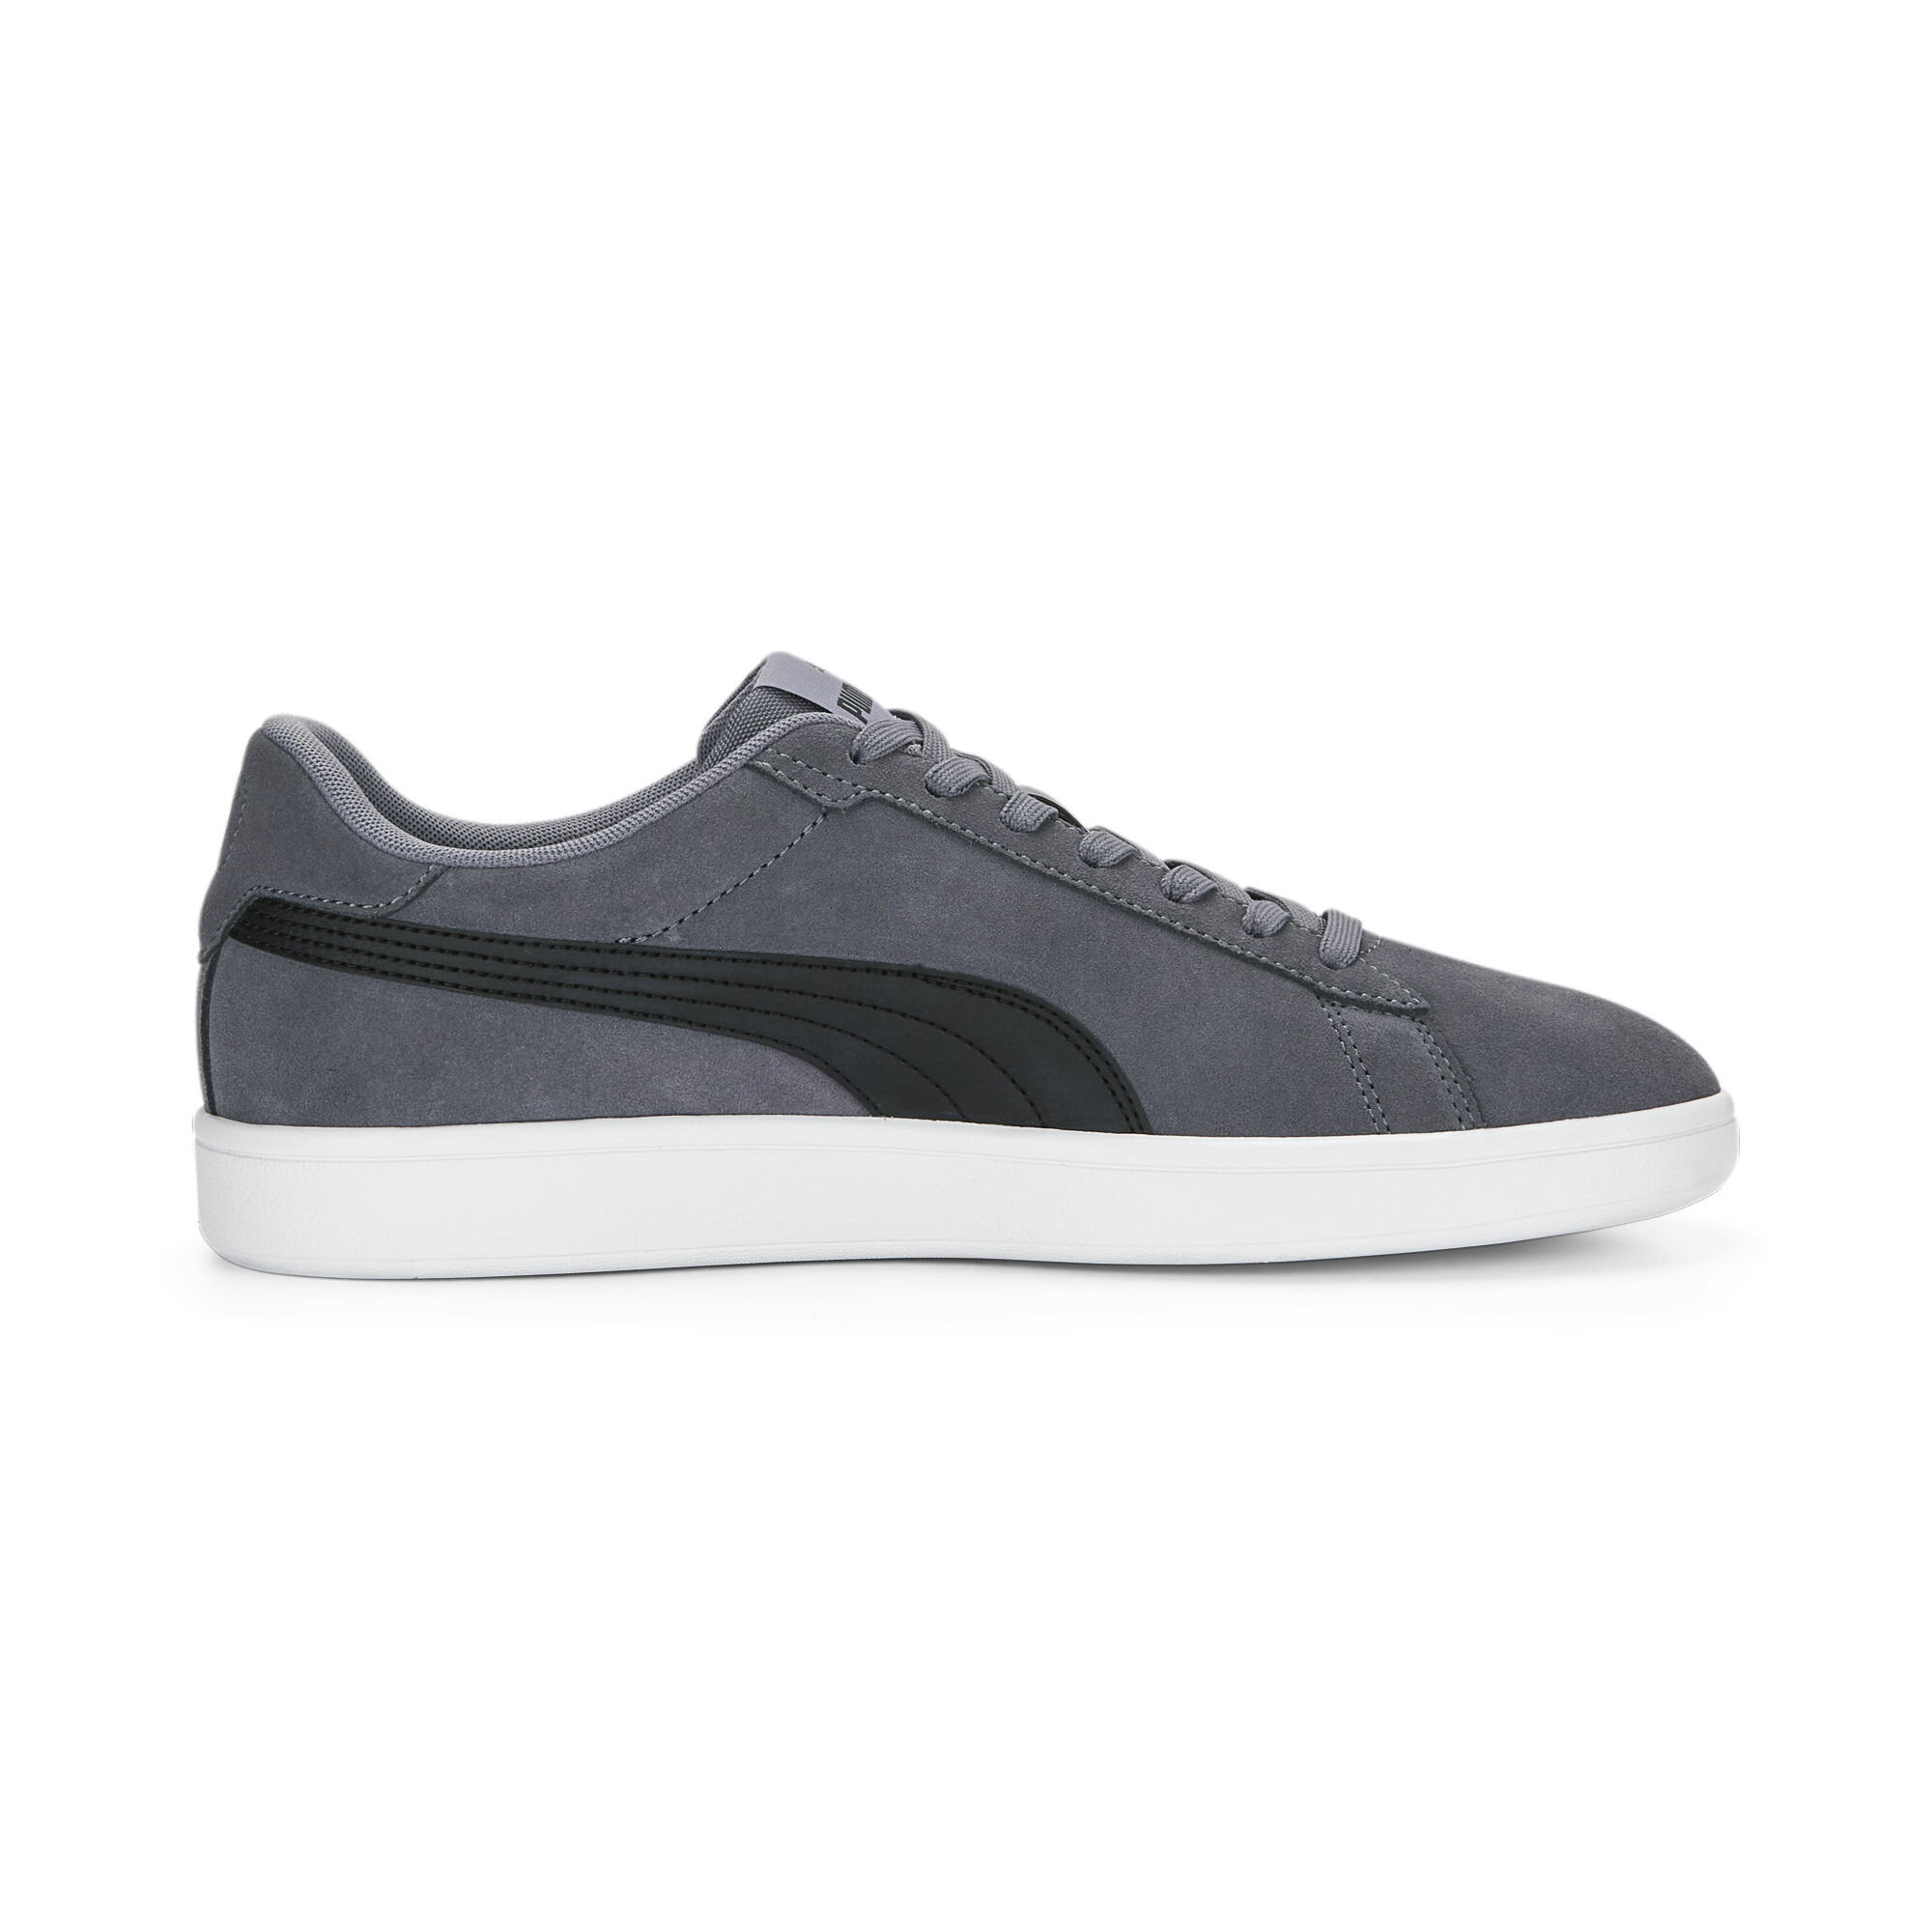 Puma Smash 3.0 Sneakers, Gray, Size 45, Shoes